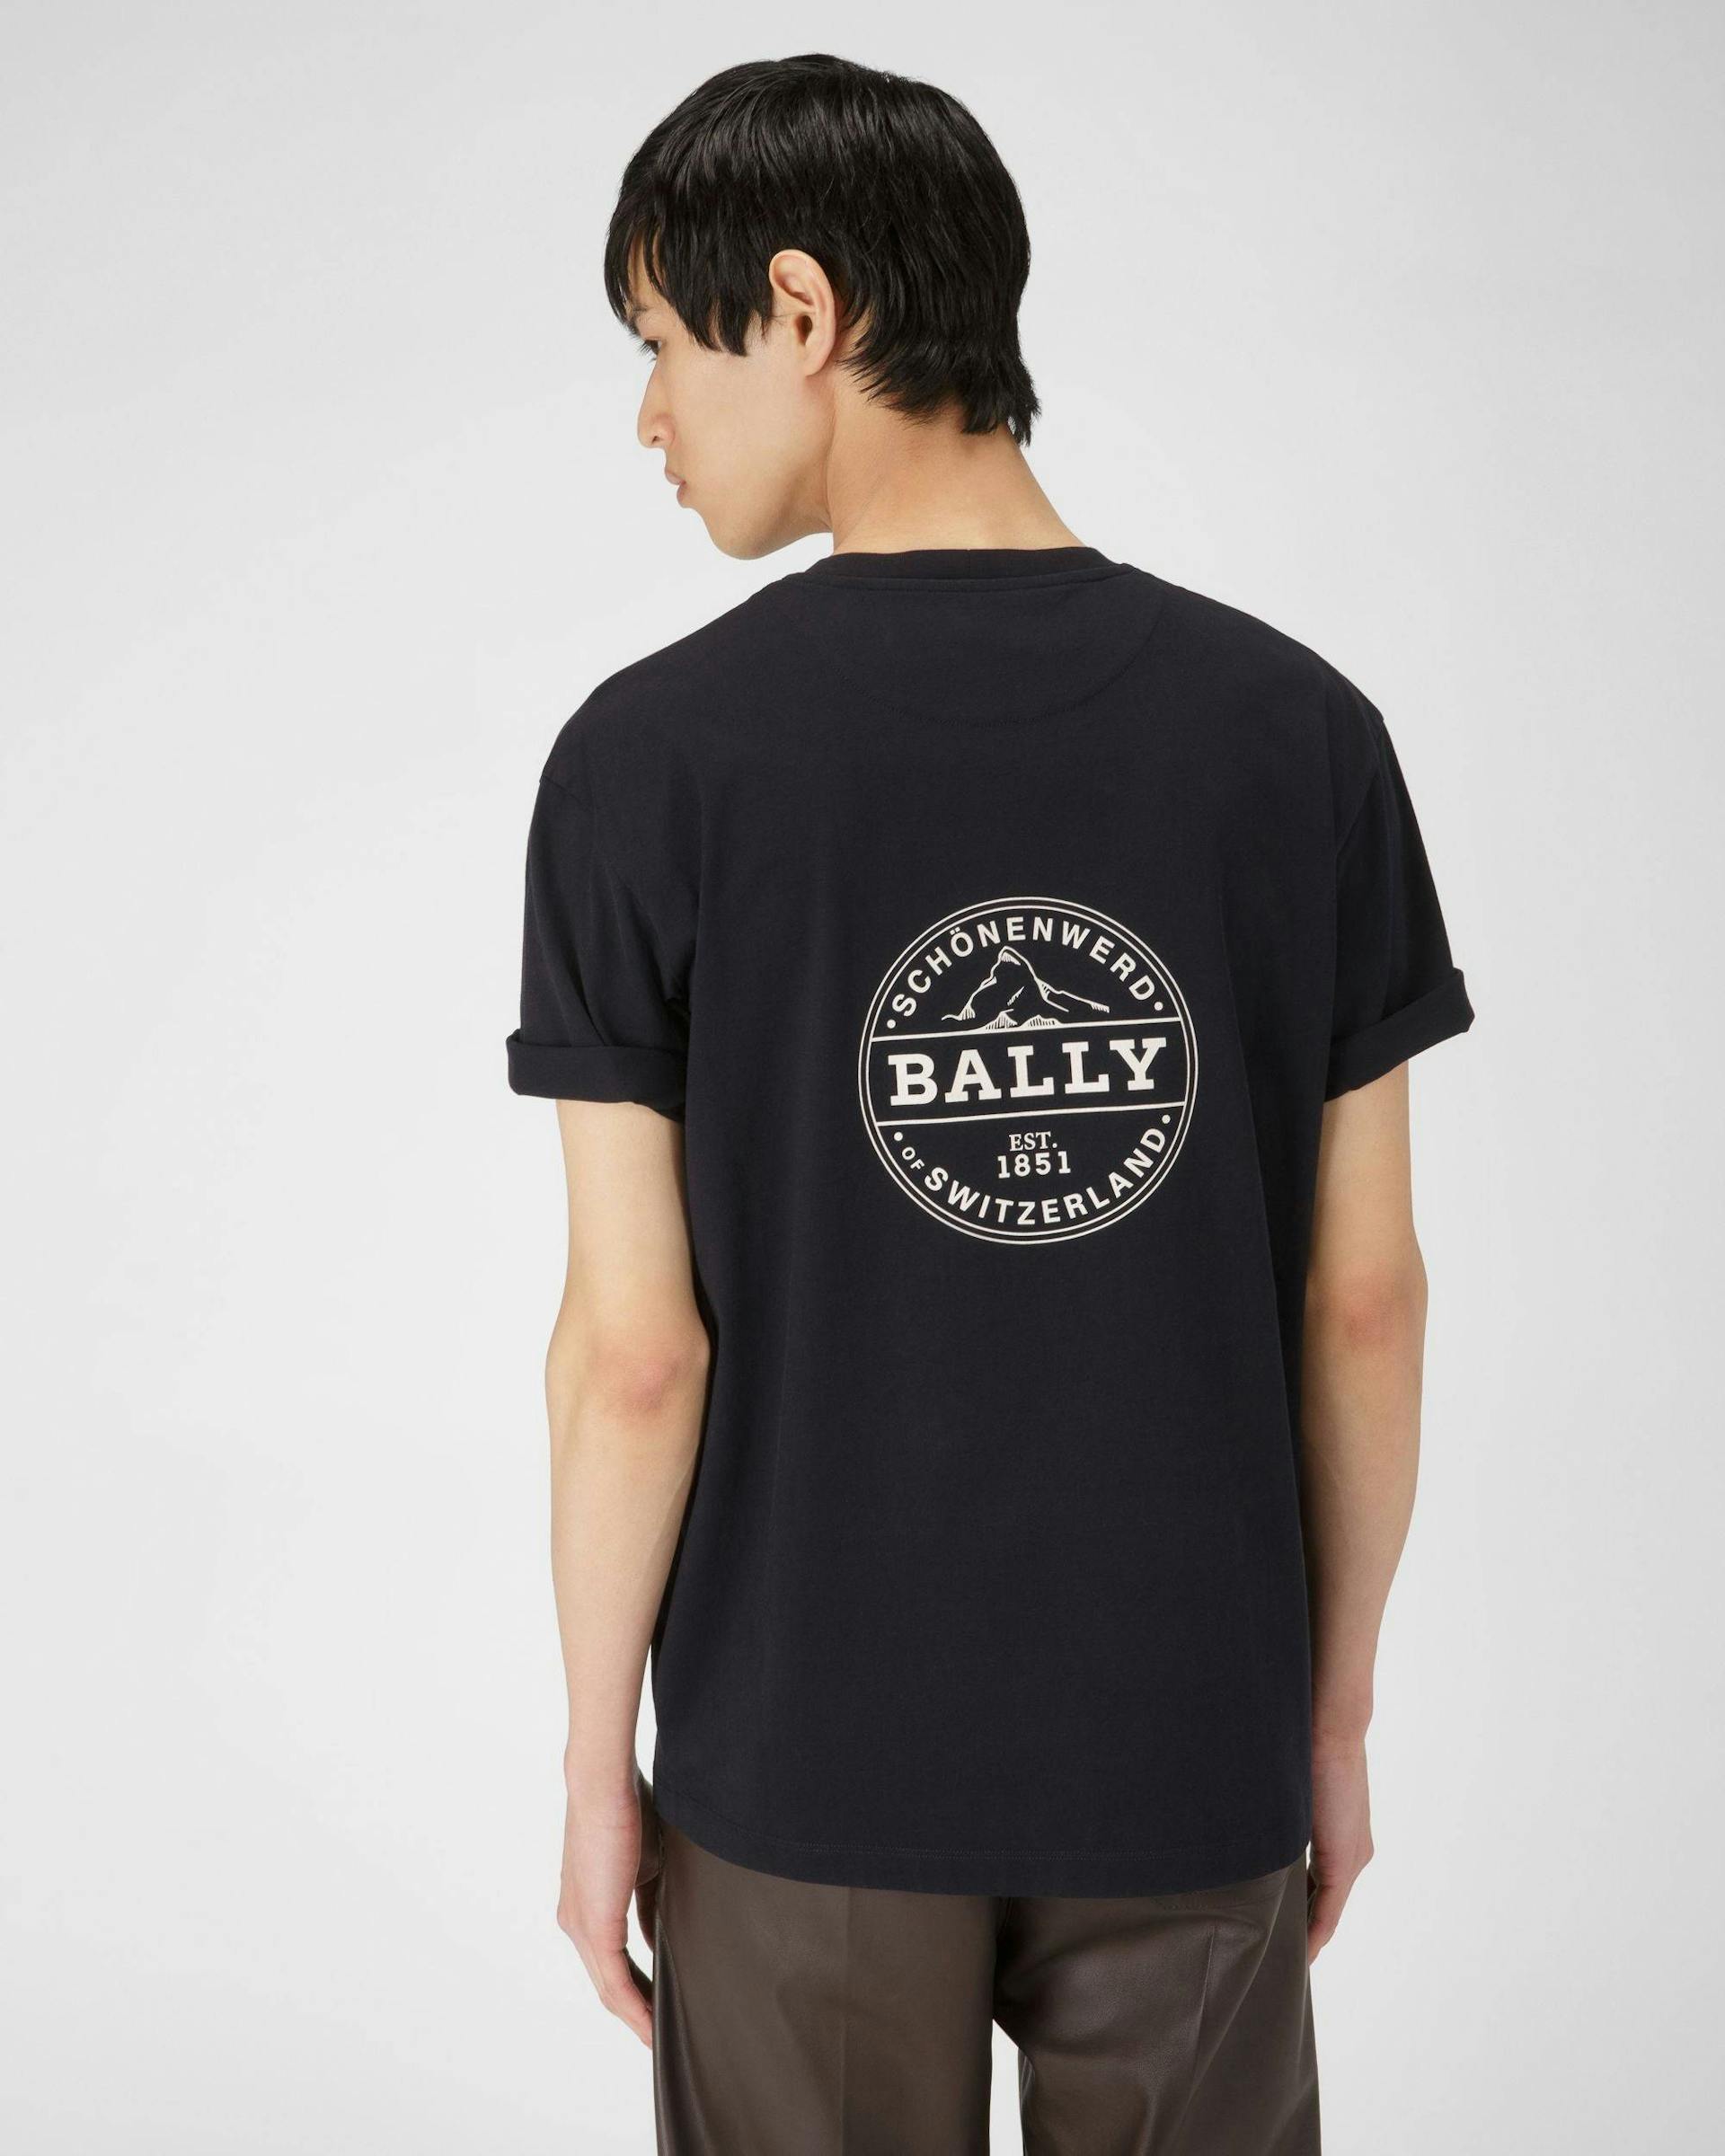 T-Shirt En Coton Biologique Bleu Marine - Homme - Bally - 03